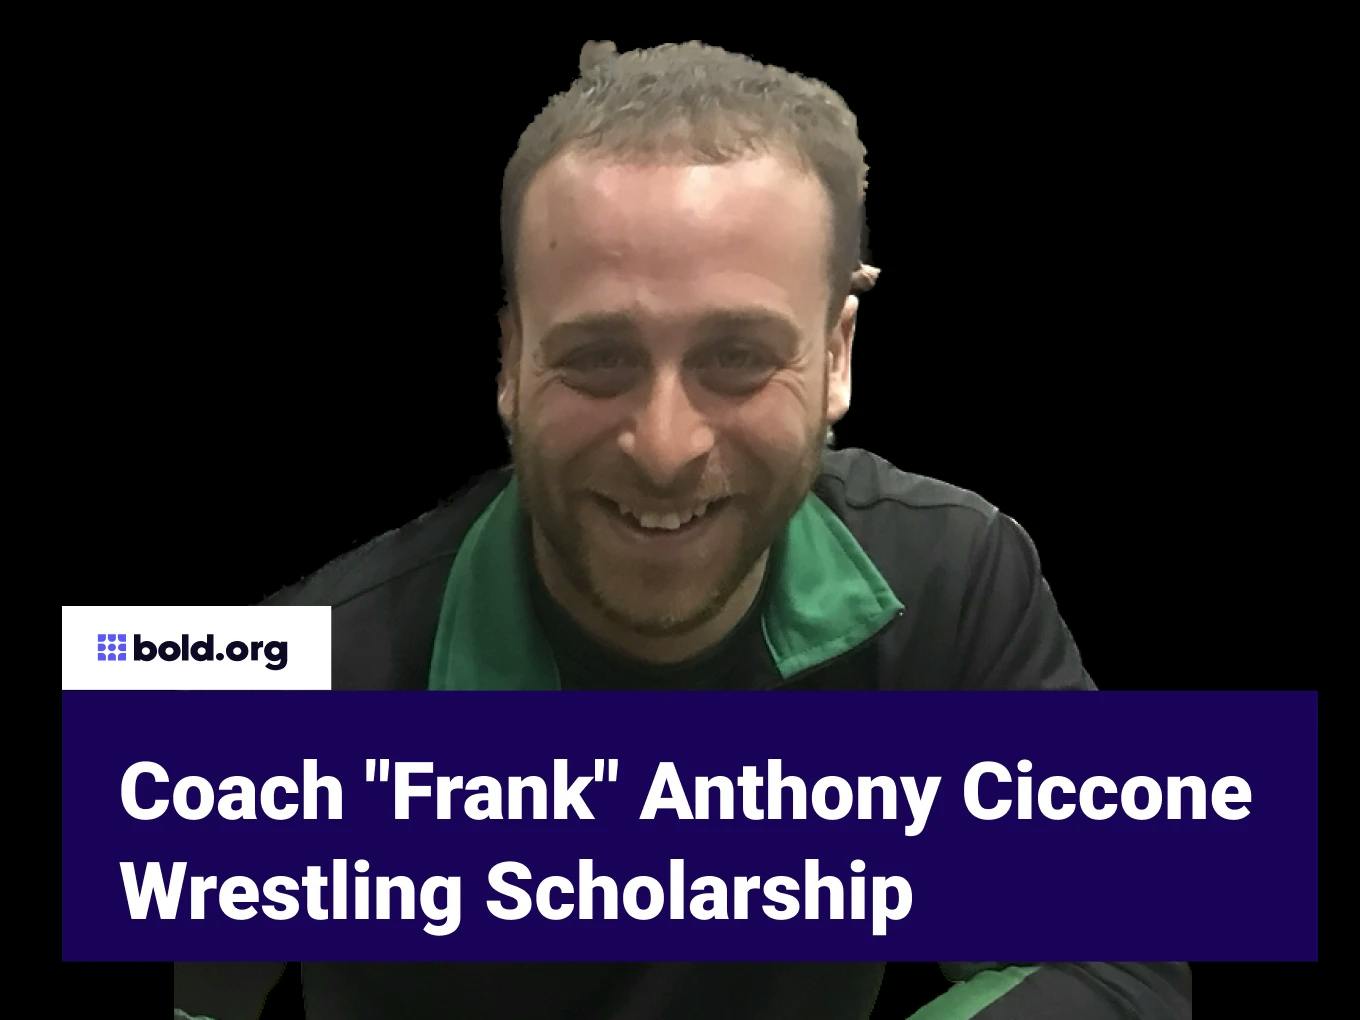 Coach "Frank" Anthony Ciccone Wrestling Scholarship